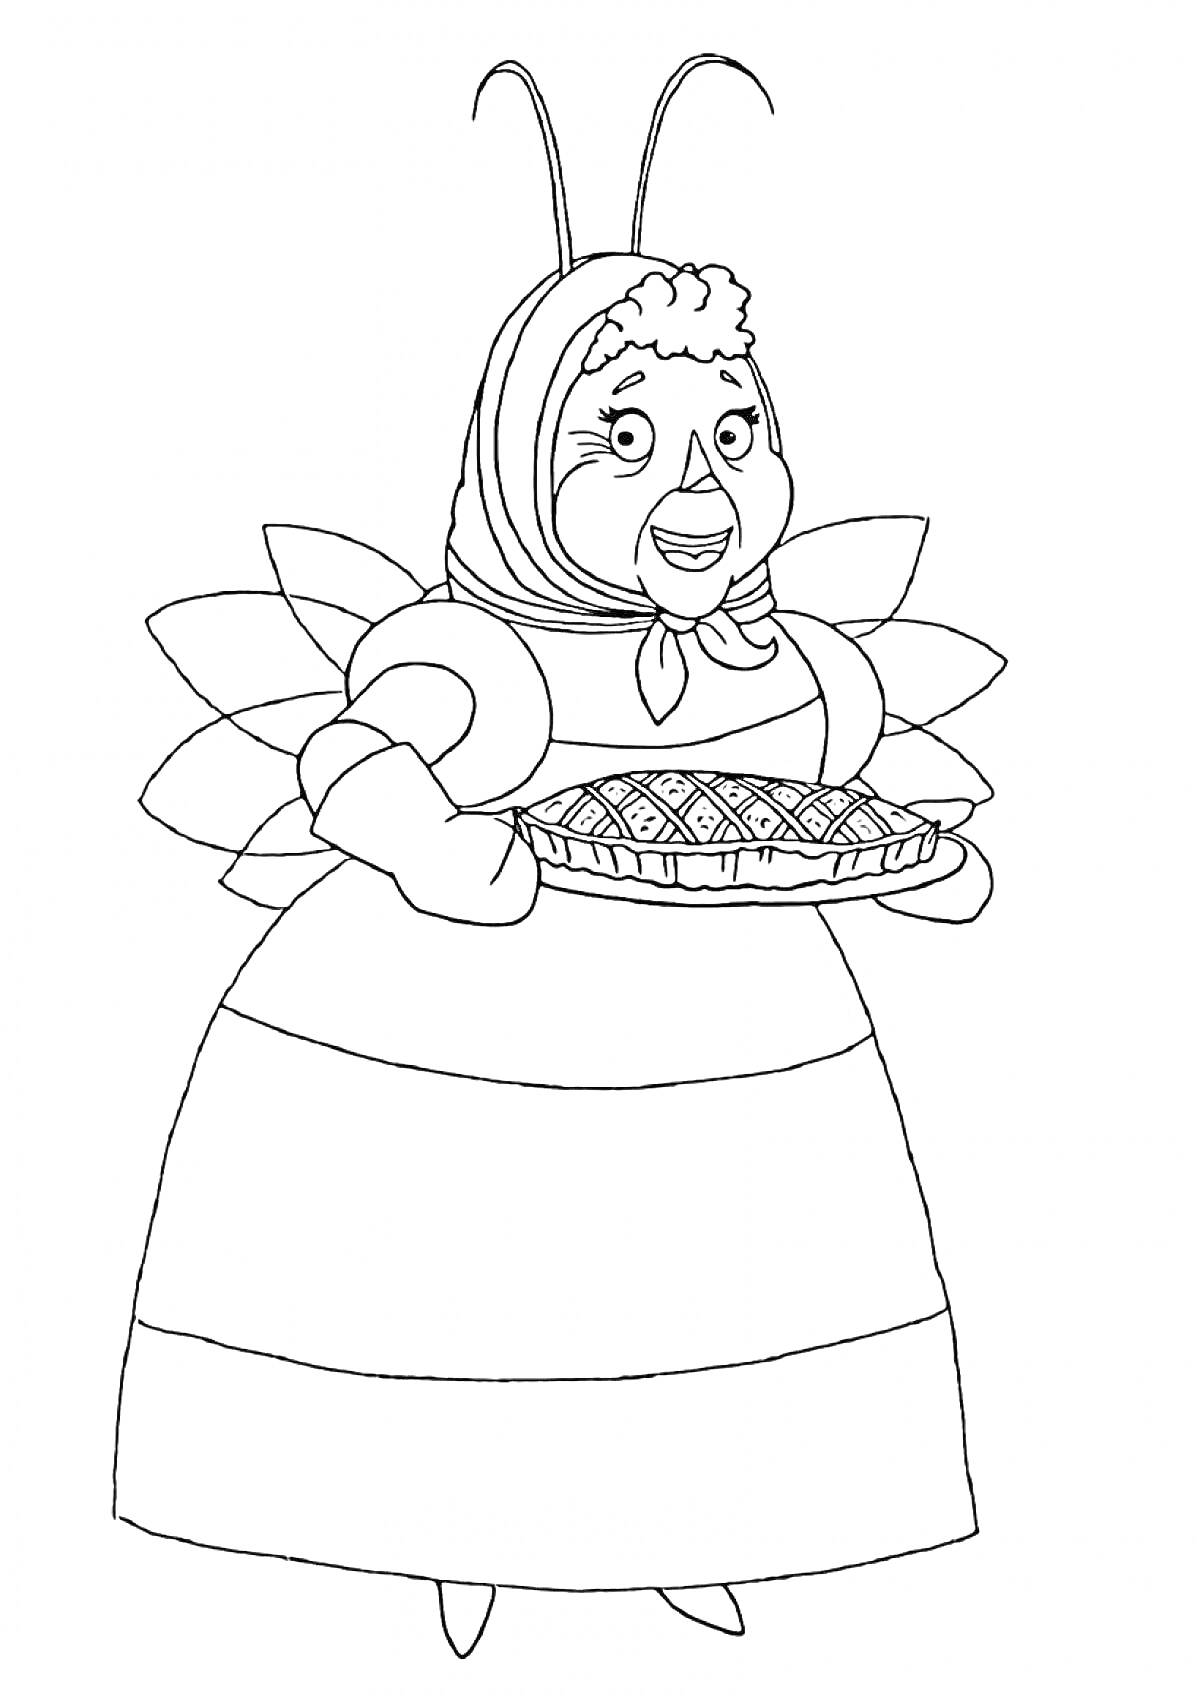 Баба Капа с пирогом на руках